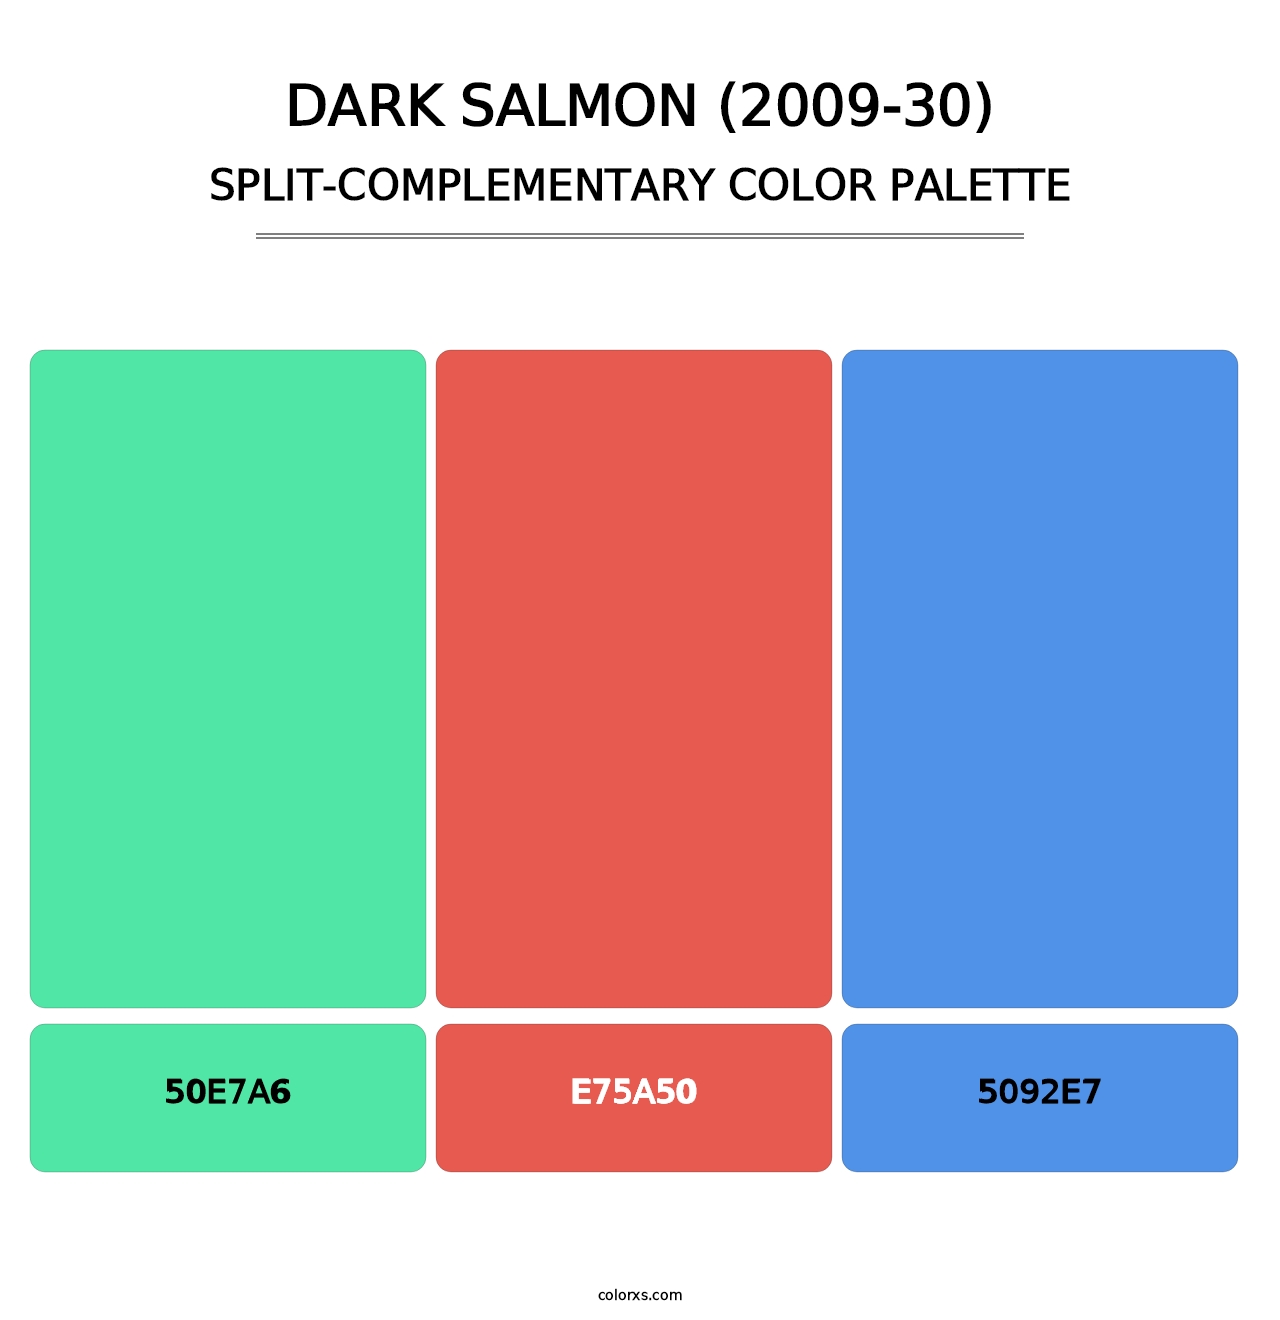 Dark Salmon (2009-30) - Split-Complementary Color Palette